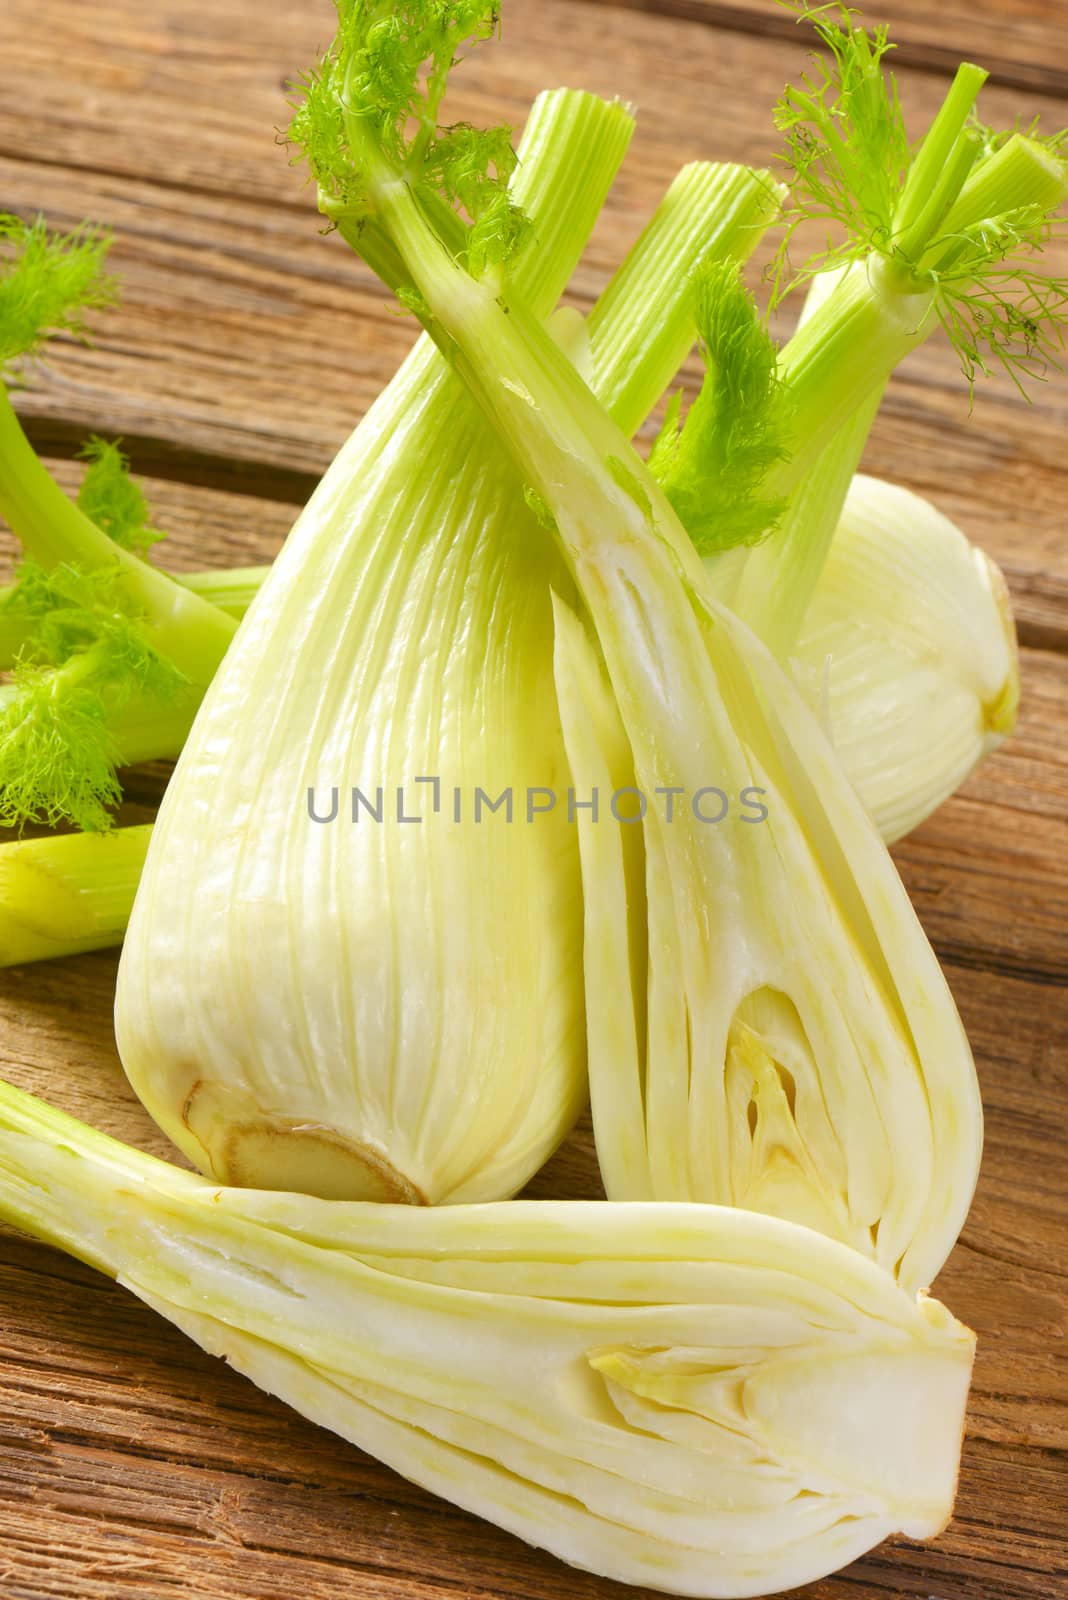 bulbs of fresh fennel by Digifoodstock